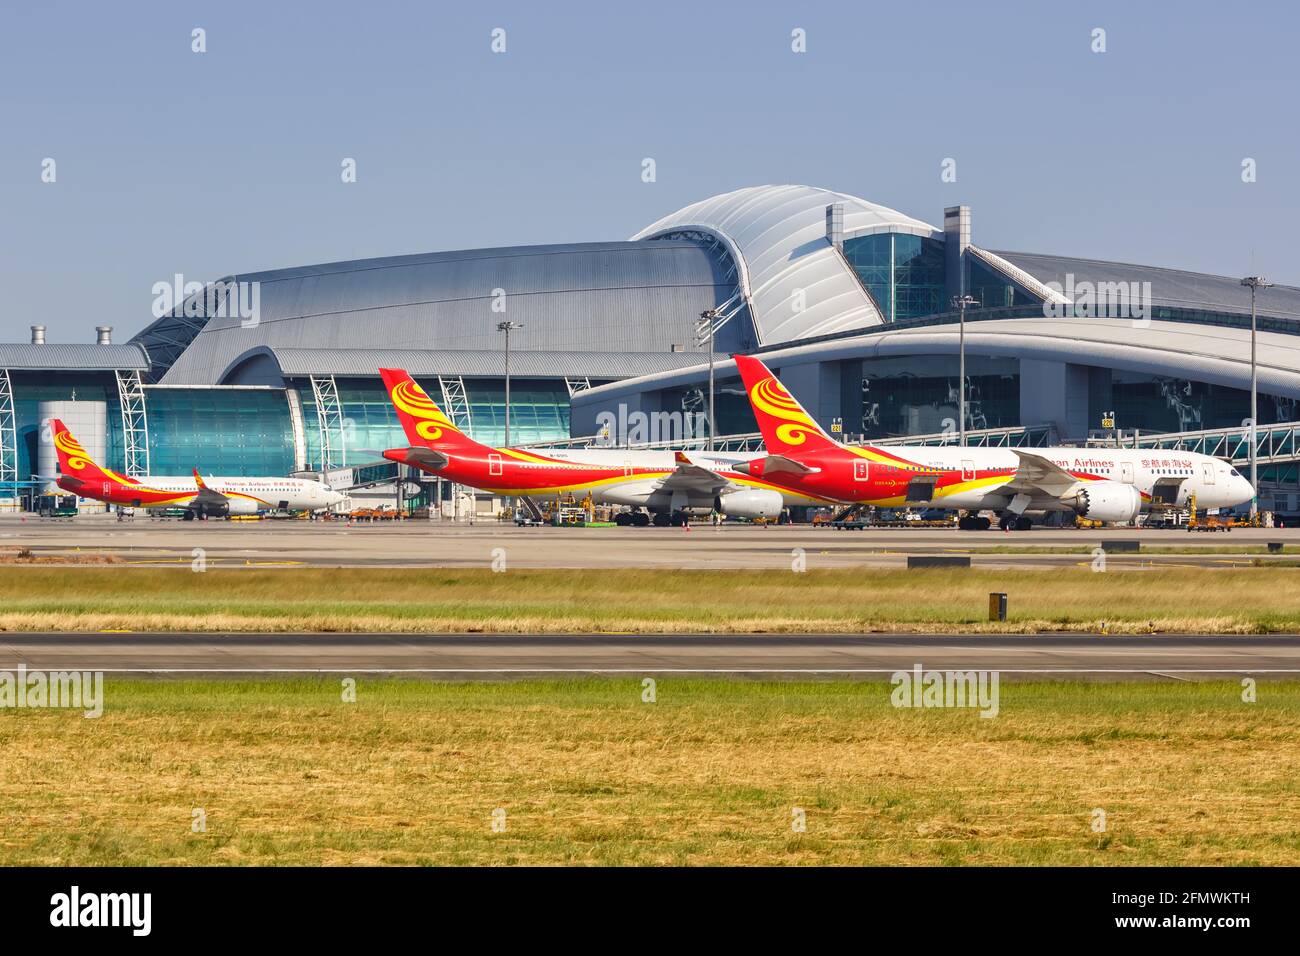 Guangzhou, China - September 23, 2019: Hainan Airlines airplanes at Guangzhou Baiyun airport (CAN) in China. Stock Photo